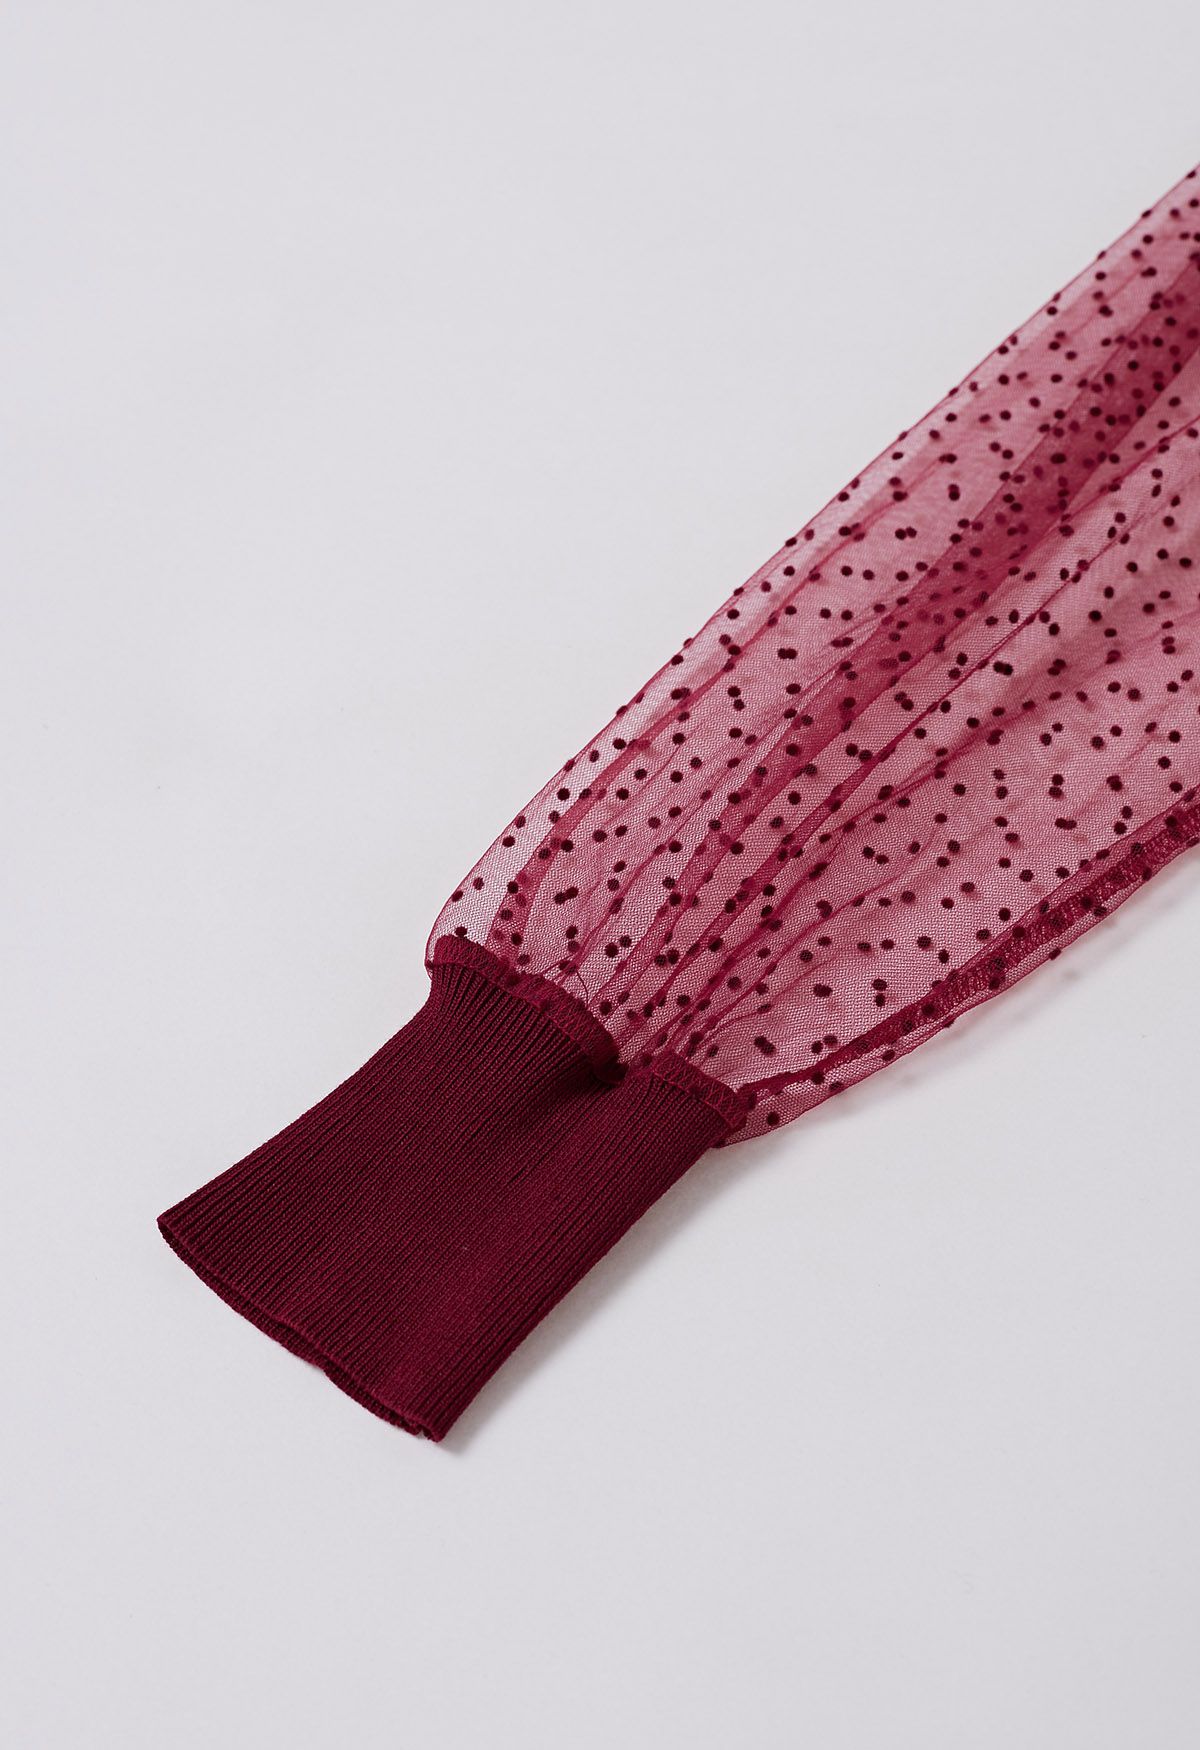 Flock Dots Mesh Spliced Knit Top in Burgundy